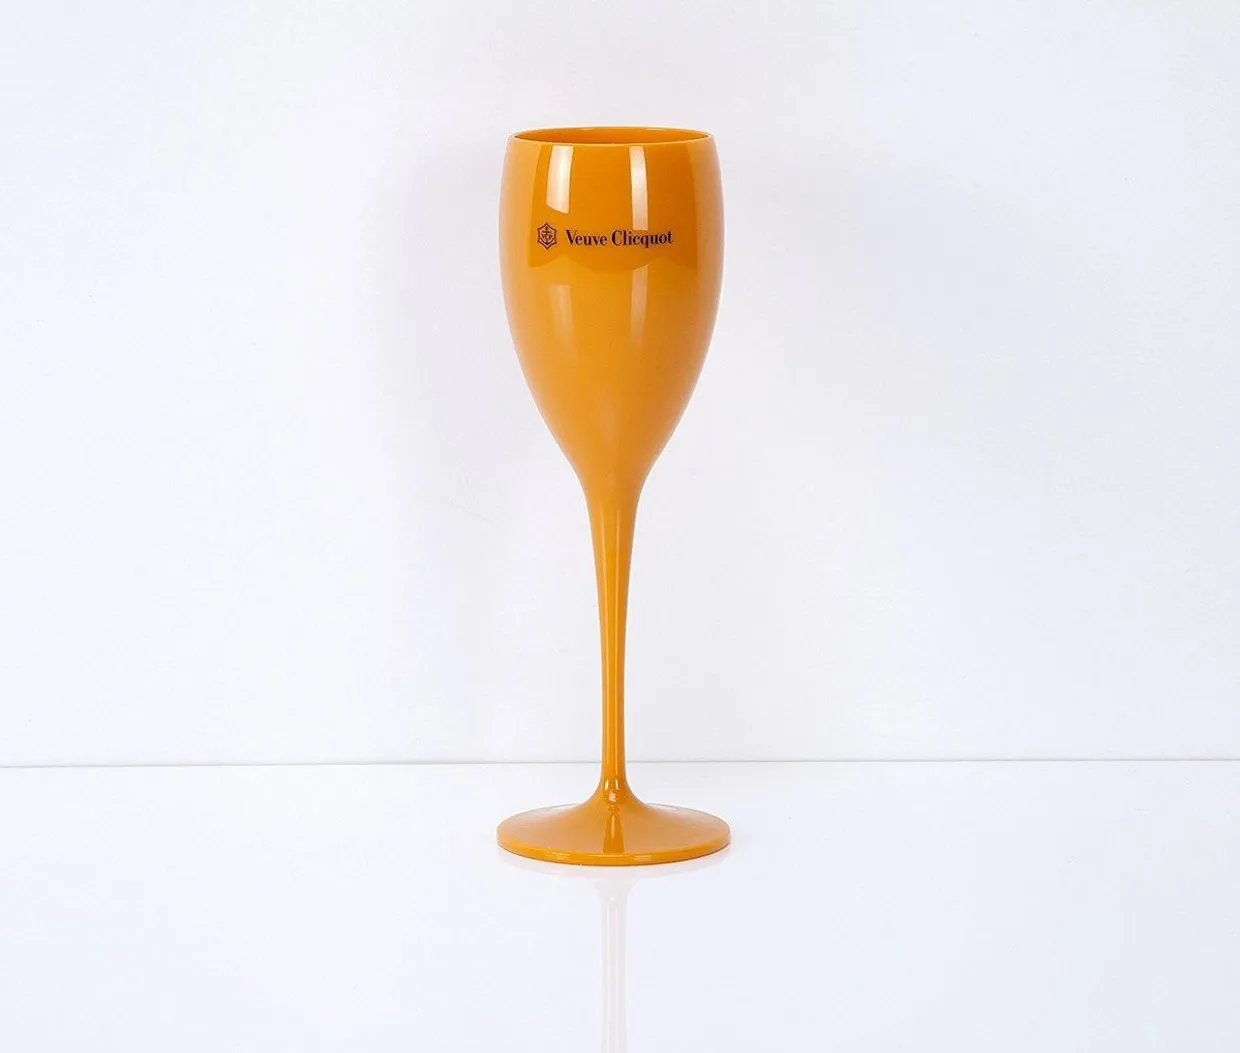 Kunststof Veuve Clicquot Glas